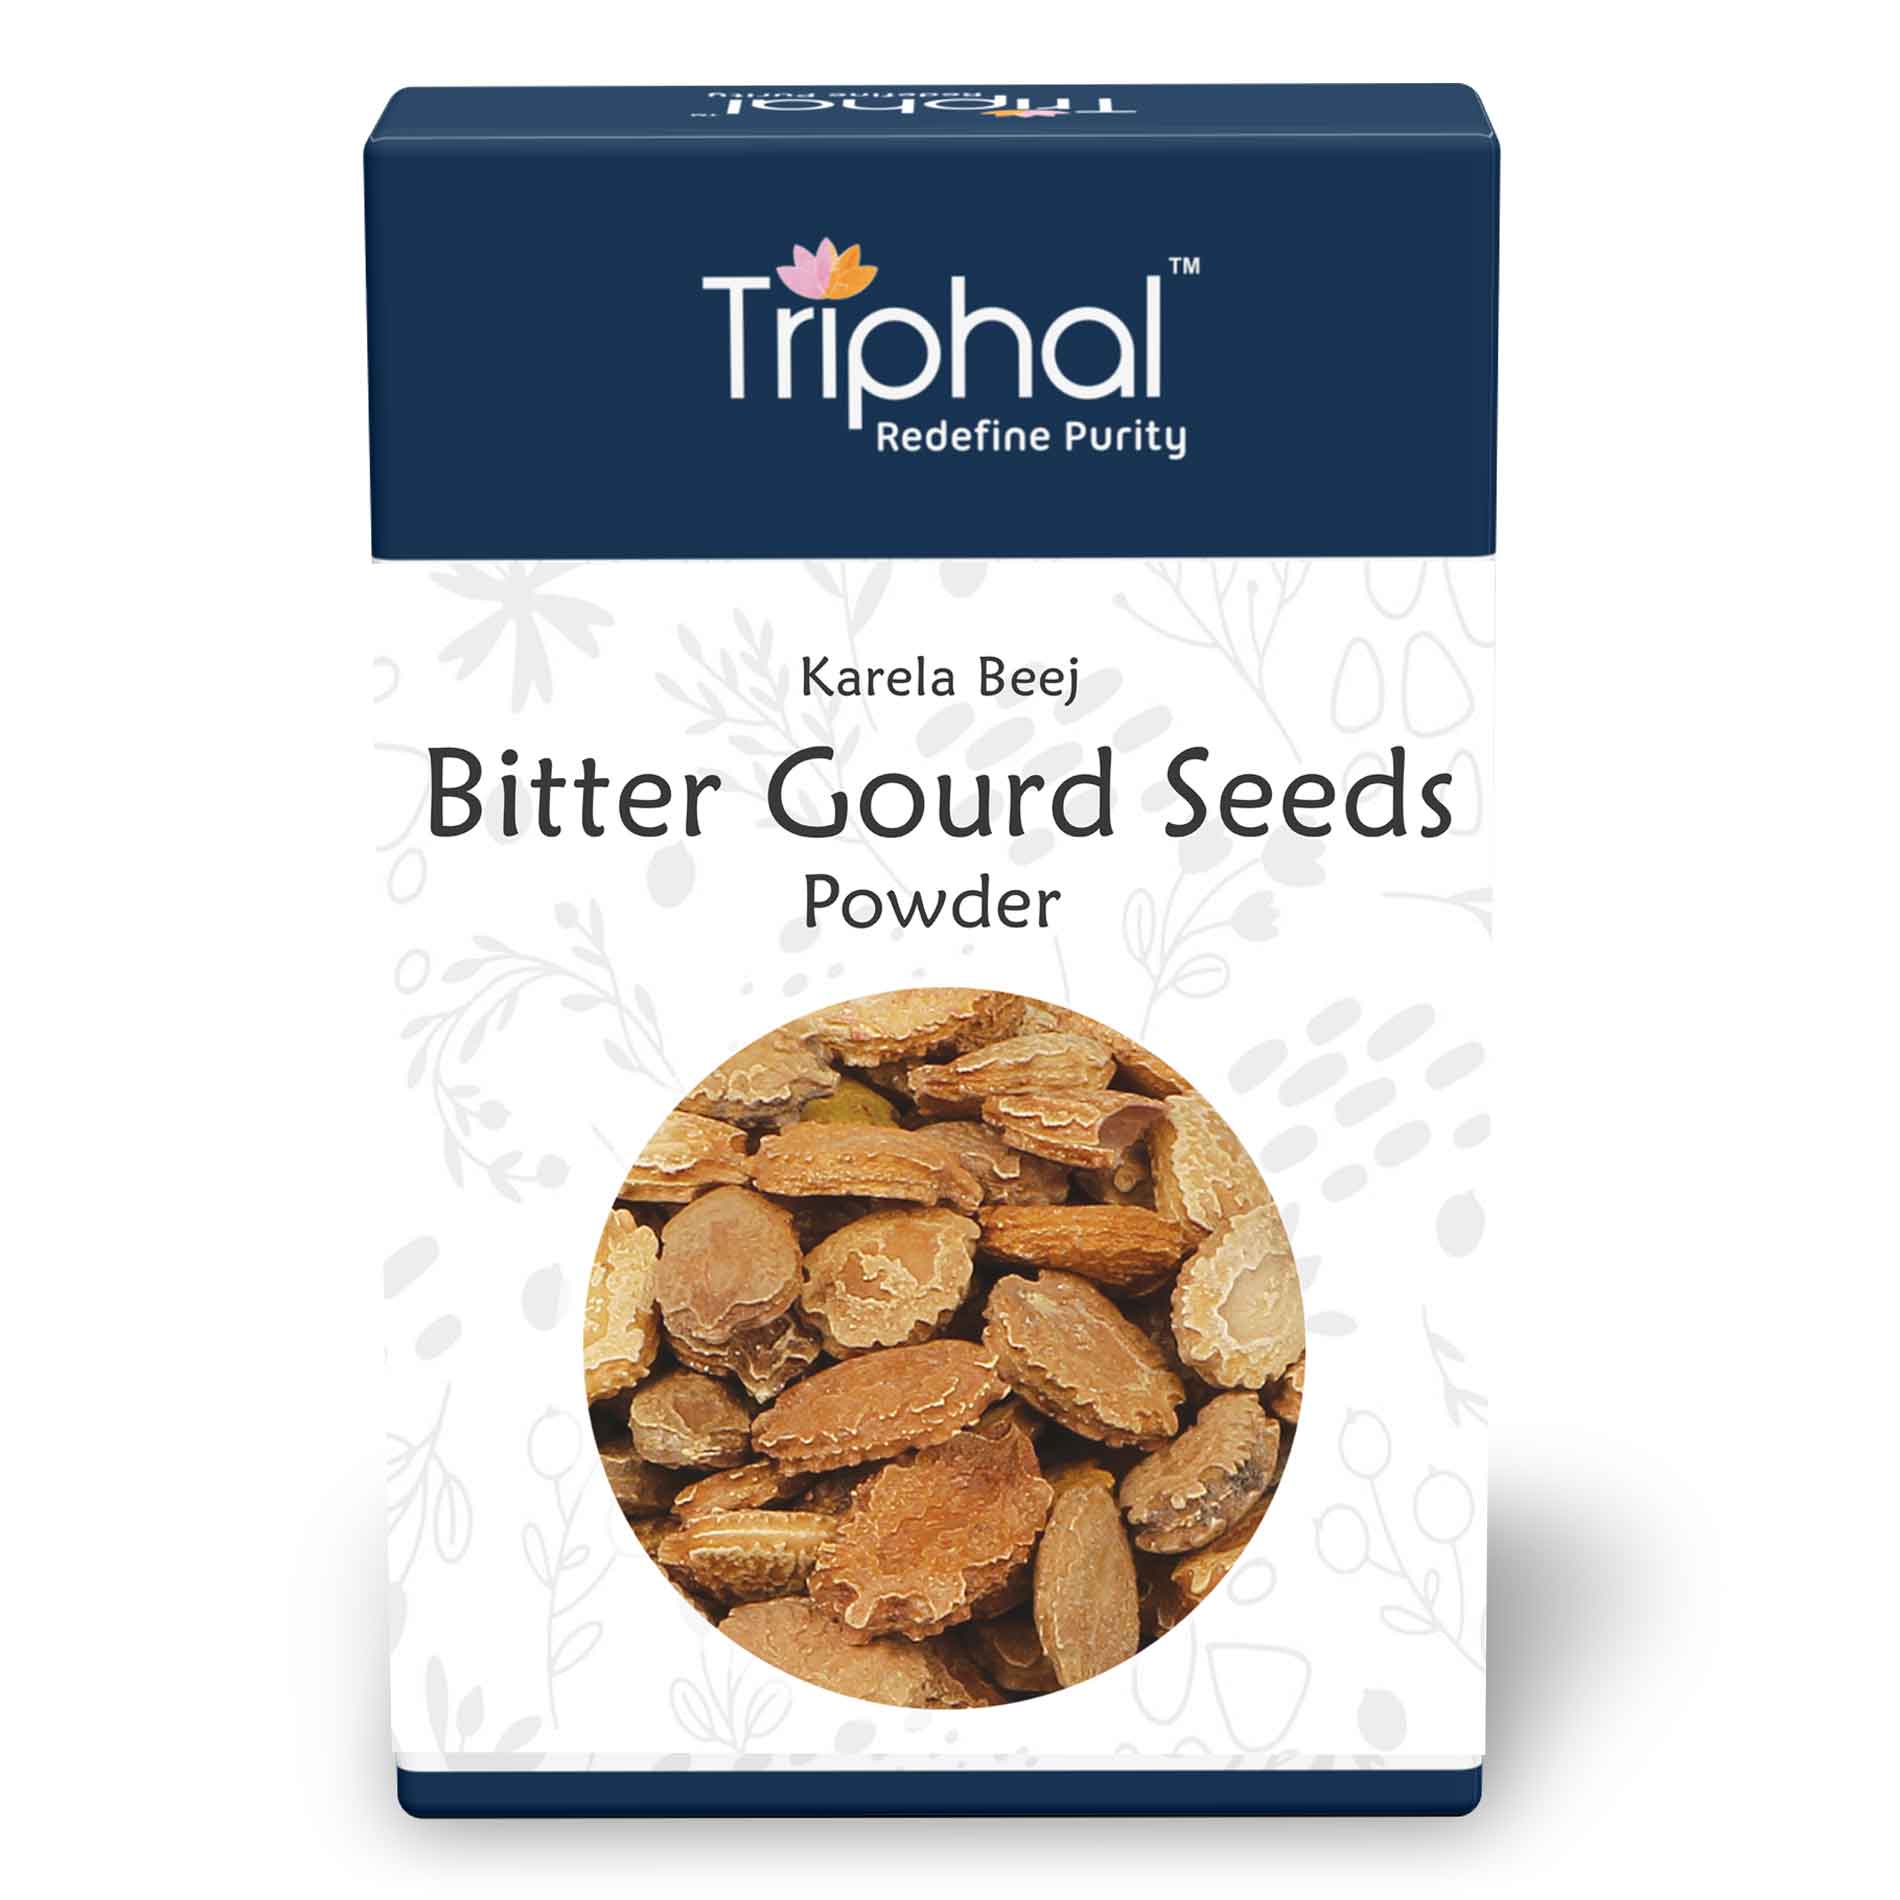 Bitter Gourd Seeds Powder - Karela Beej Churn Pure and Natural